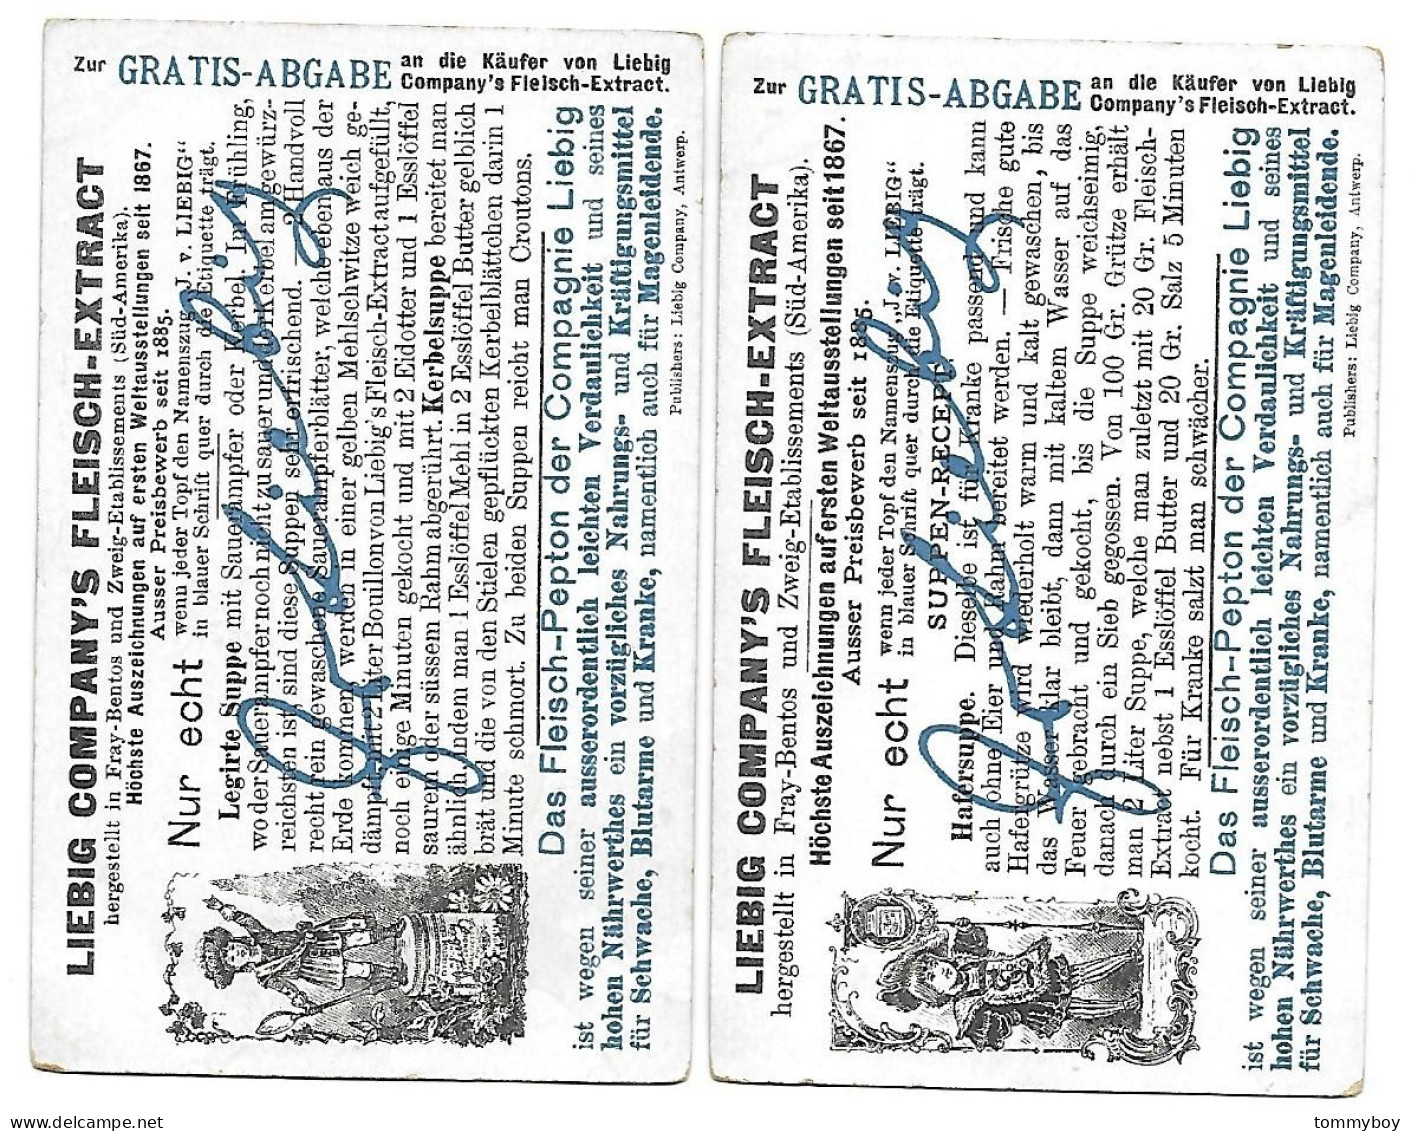 S 590, Liebig 6 Cards, Gnomenreich (some Damage At Borders) (GERMAN) (ref B13) - Liebig